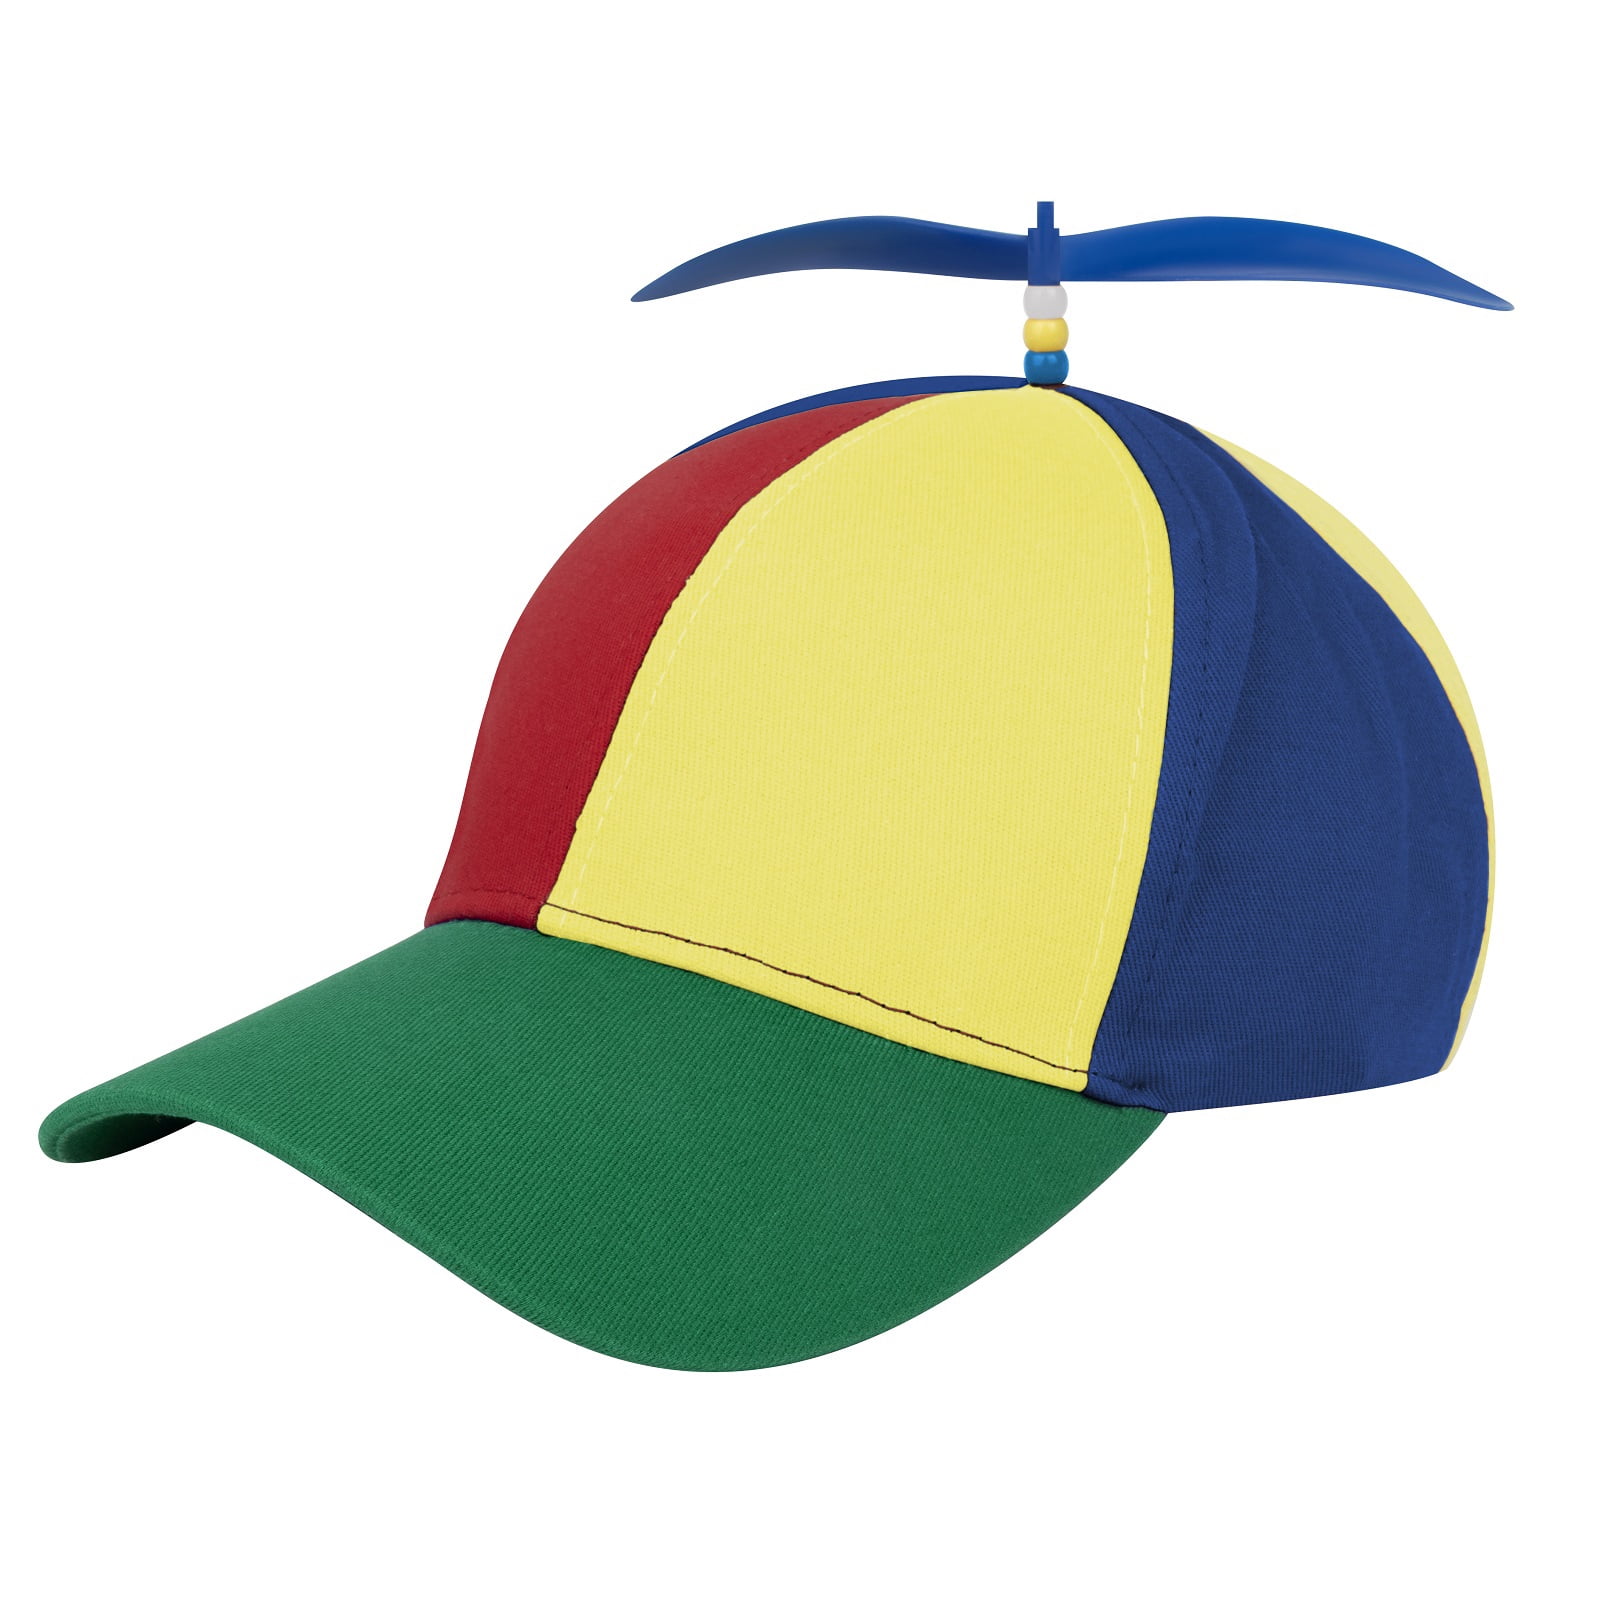 Toptie Propeller Cap Adult Unisex Baseball Cap Colorful Outdoor Hat Toy  Detachable-Green-Adult 